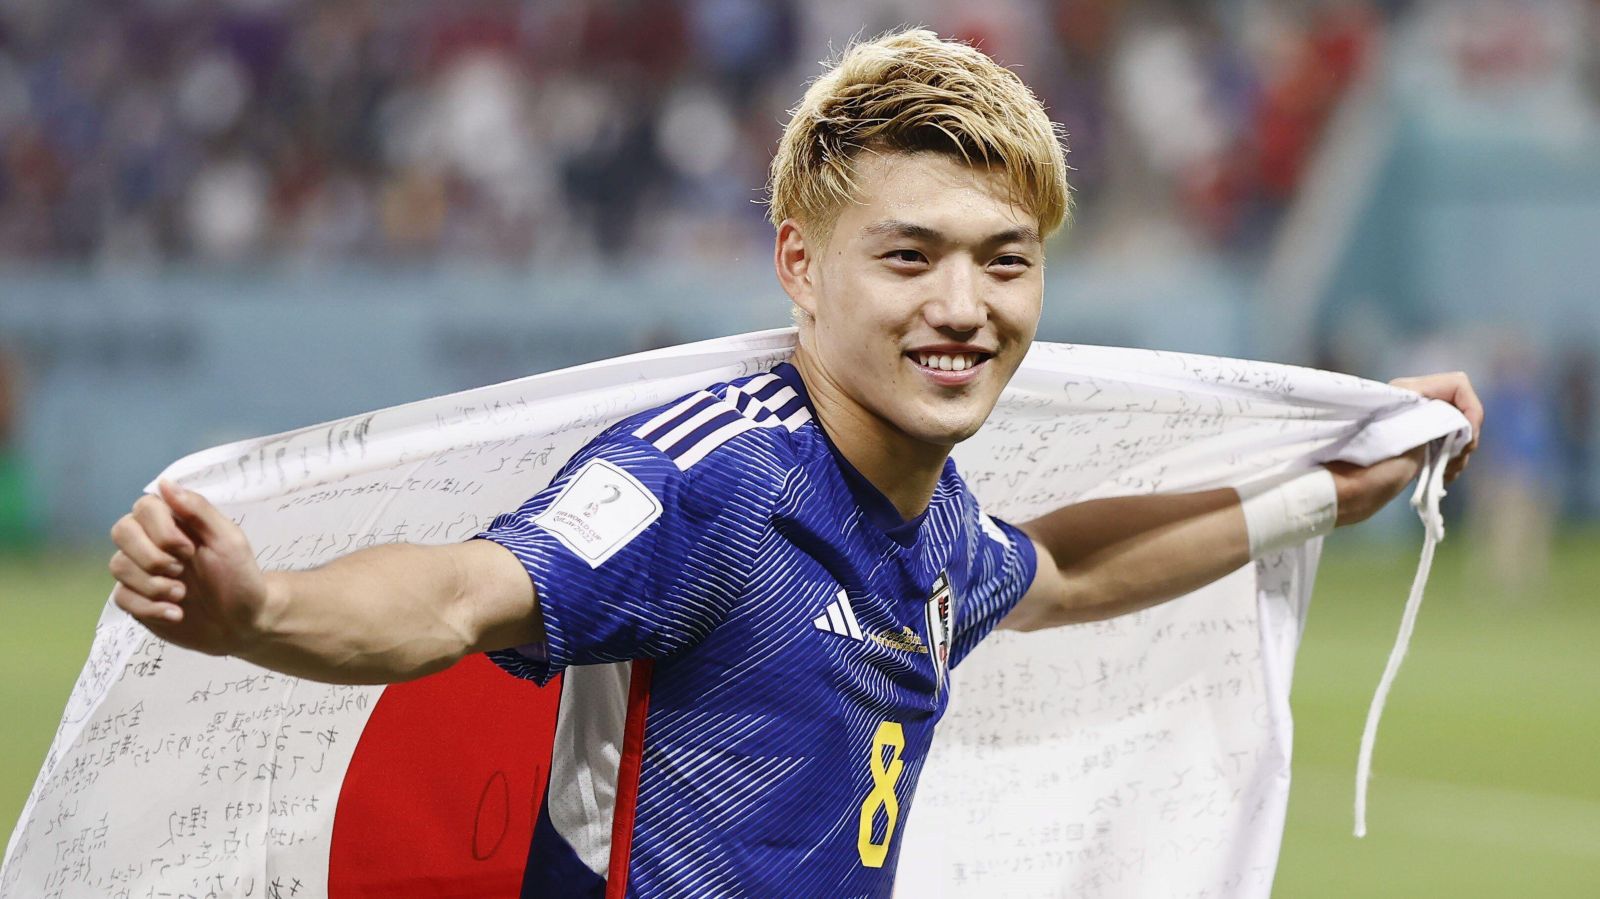 Doan strikes late as Freiburg edges lowly Hoffenheim - The Japan Times